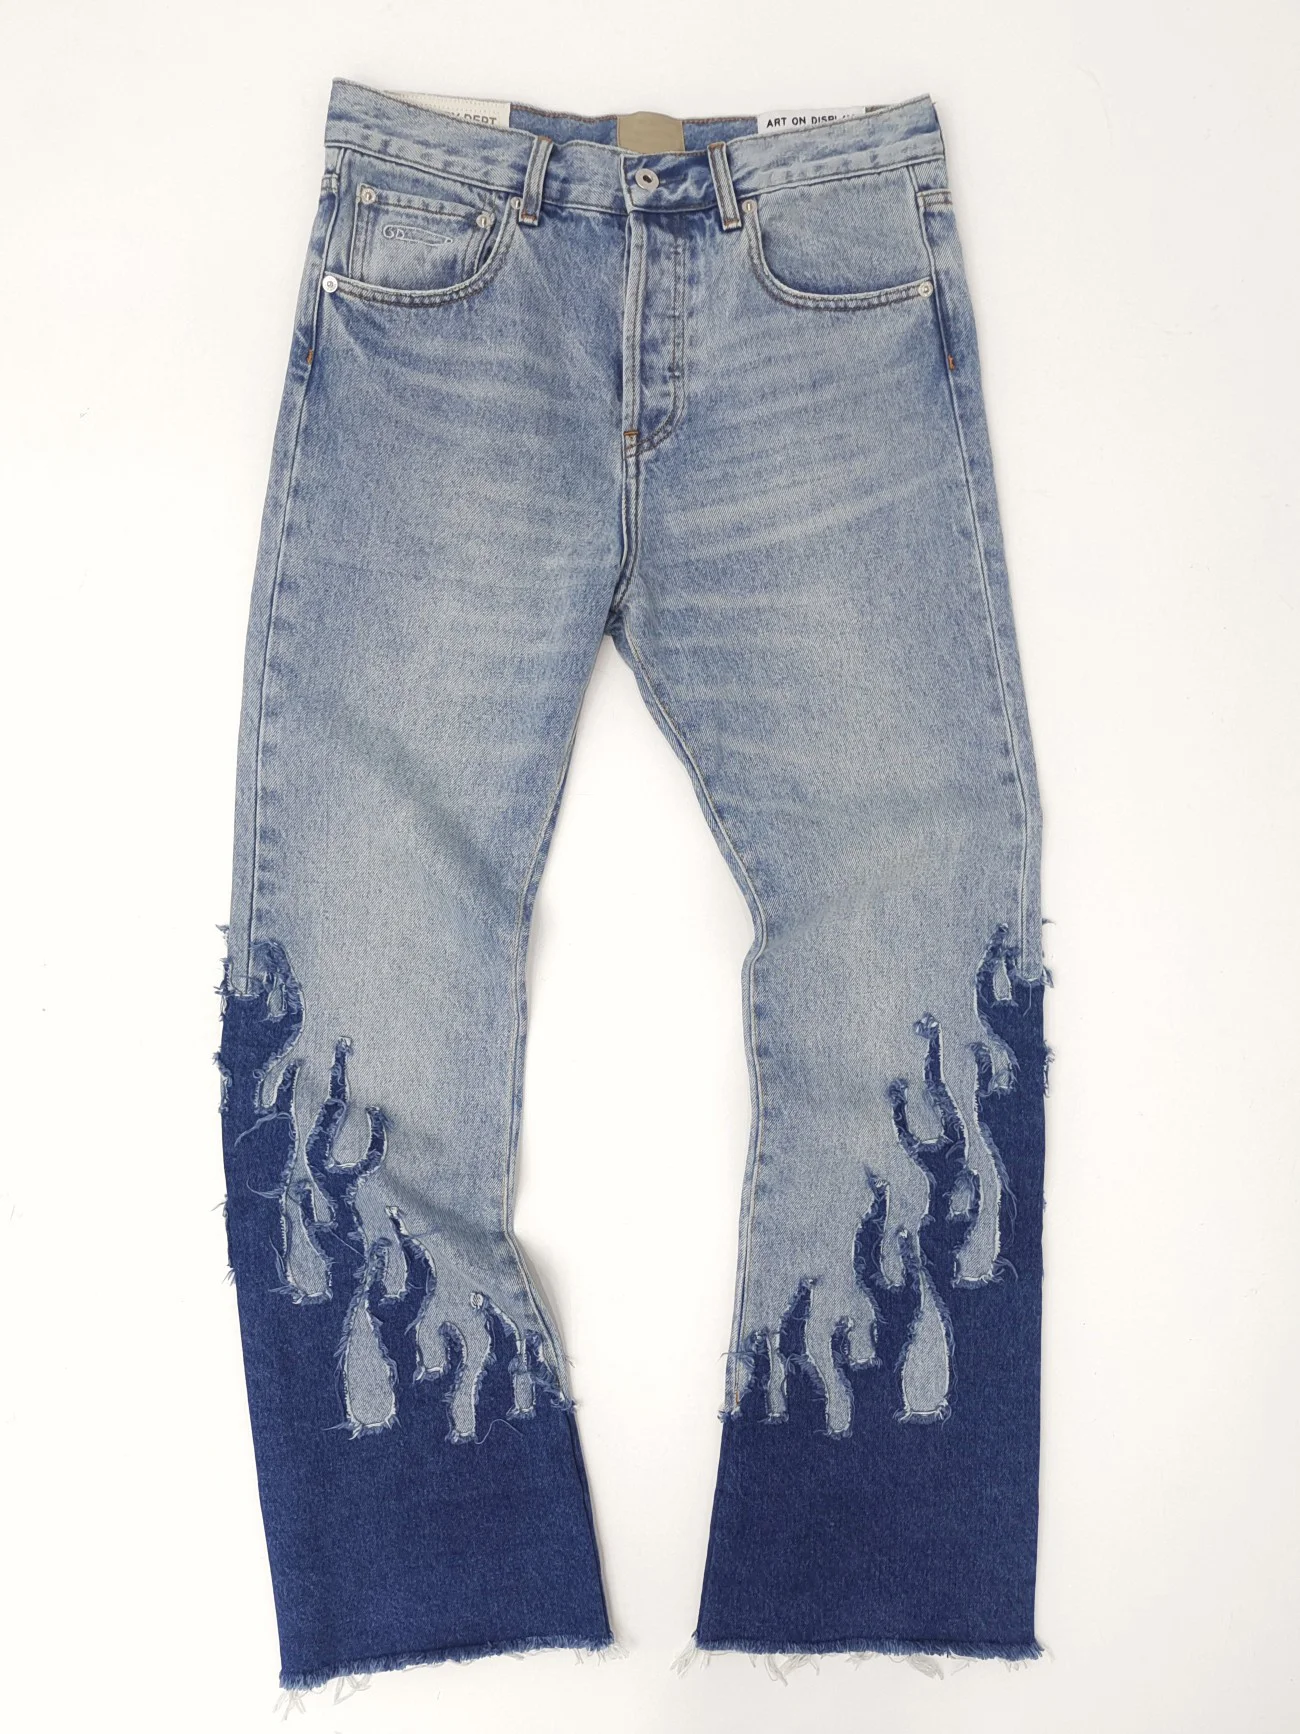 

9.0 GD Micro Flared Jeans Men's Women's Street Denim High Quality Vintage Flame Leg Long Pants